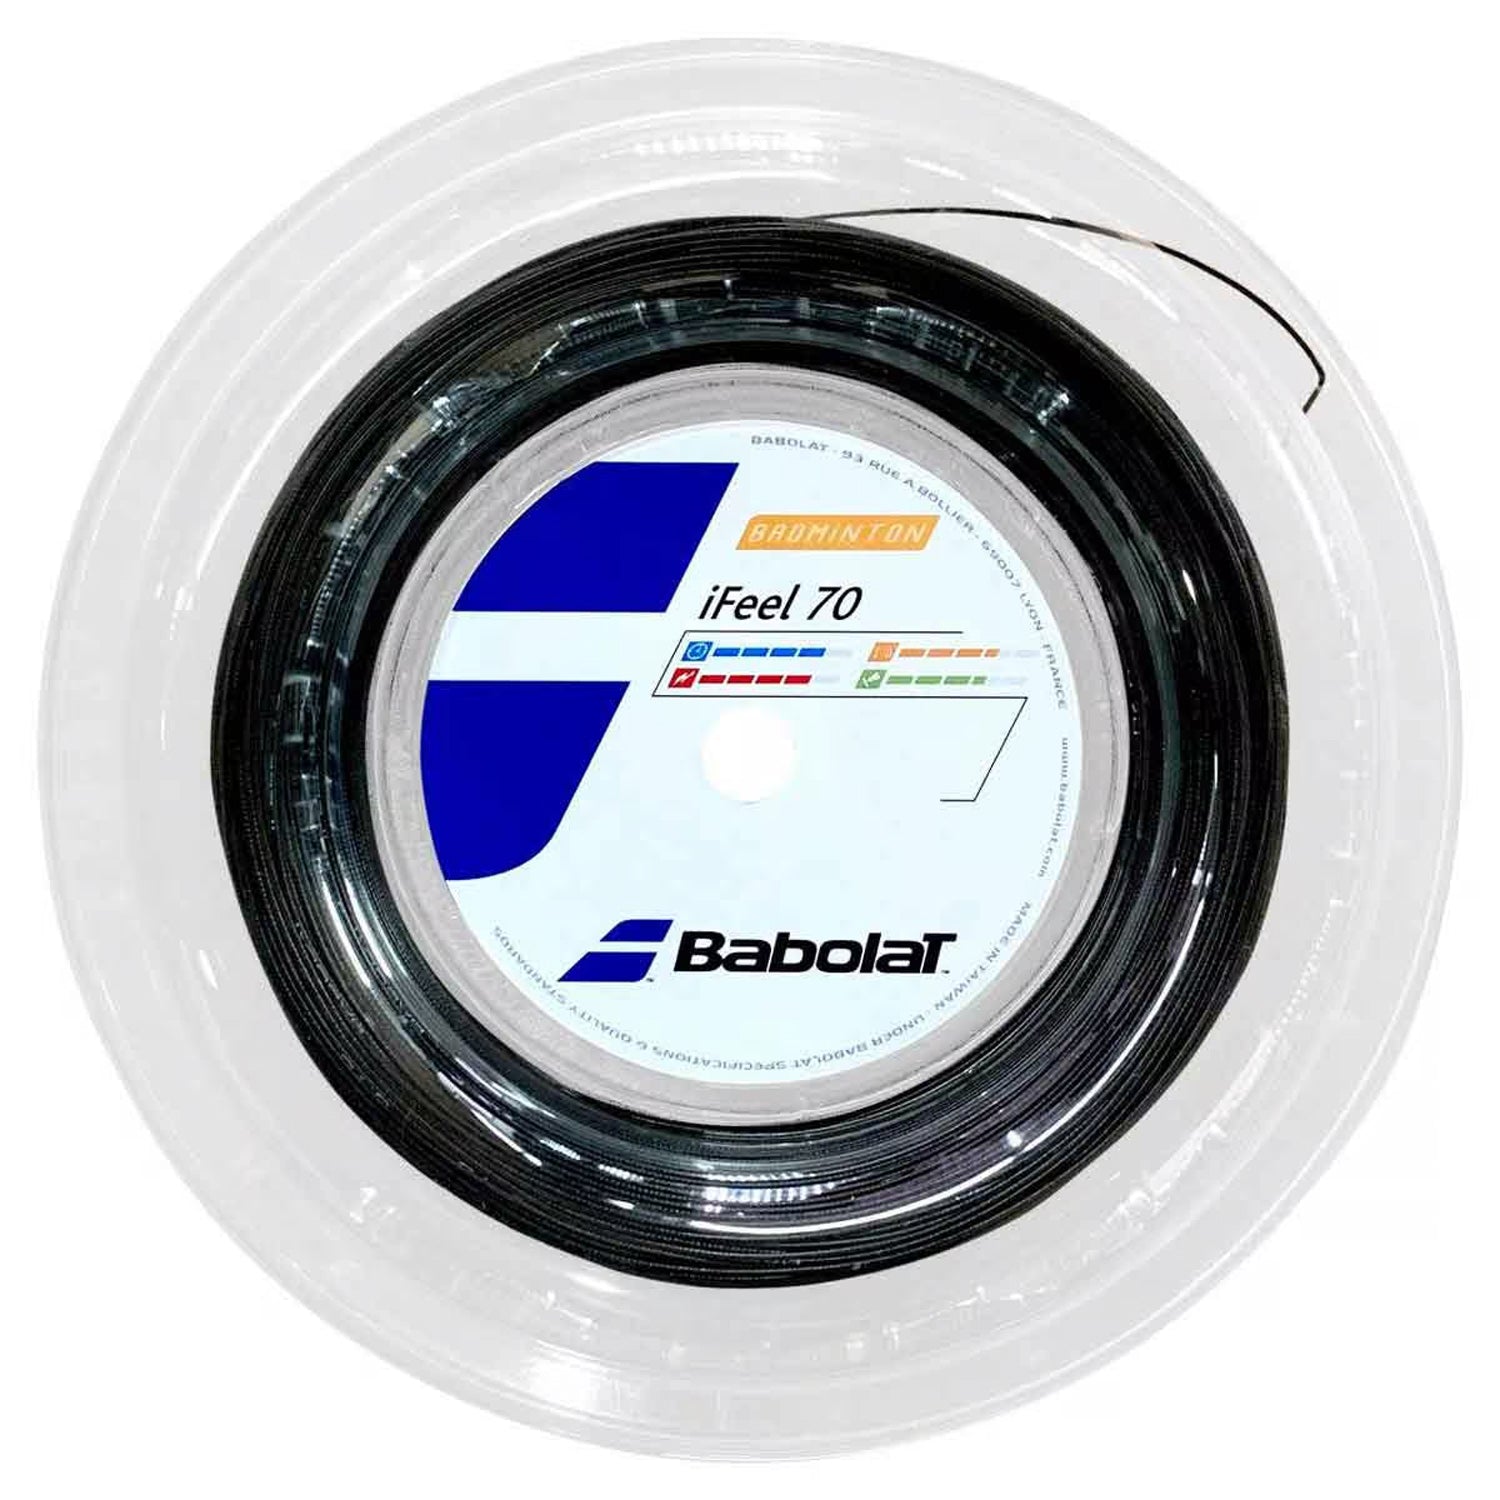 Babolat I Feel 70 Badminton String Reel, 200M - Best Price online Prokicksports.com